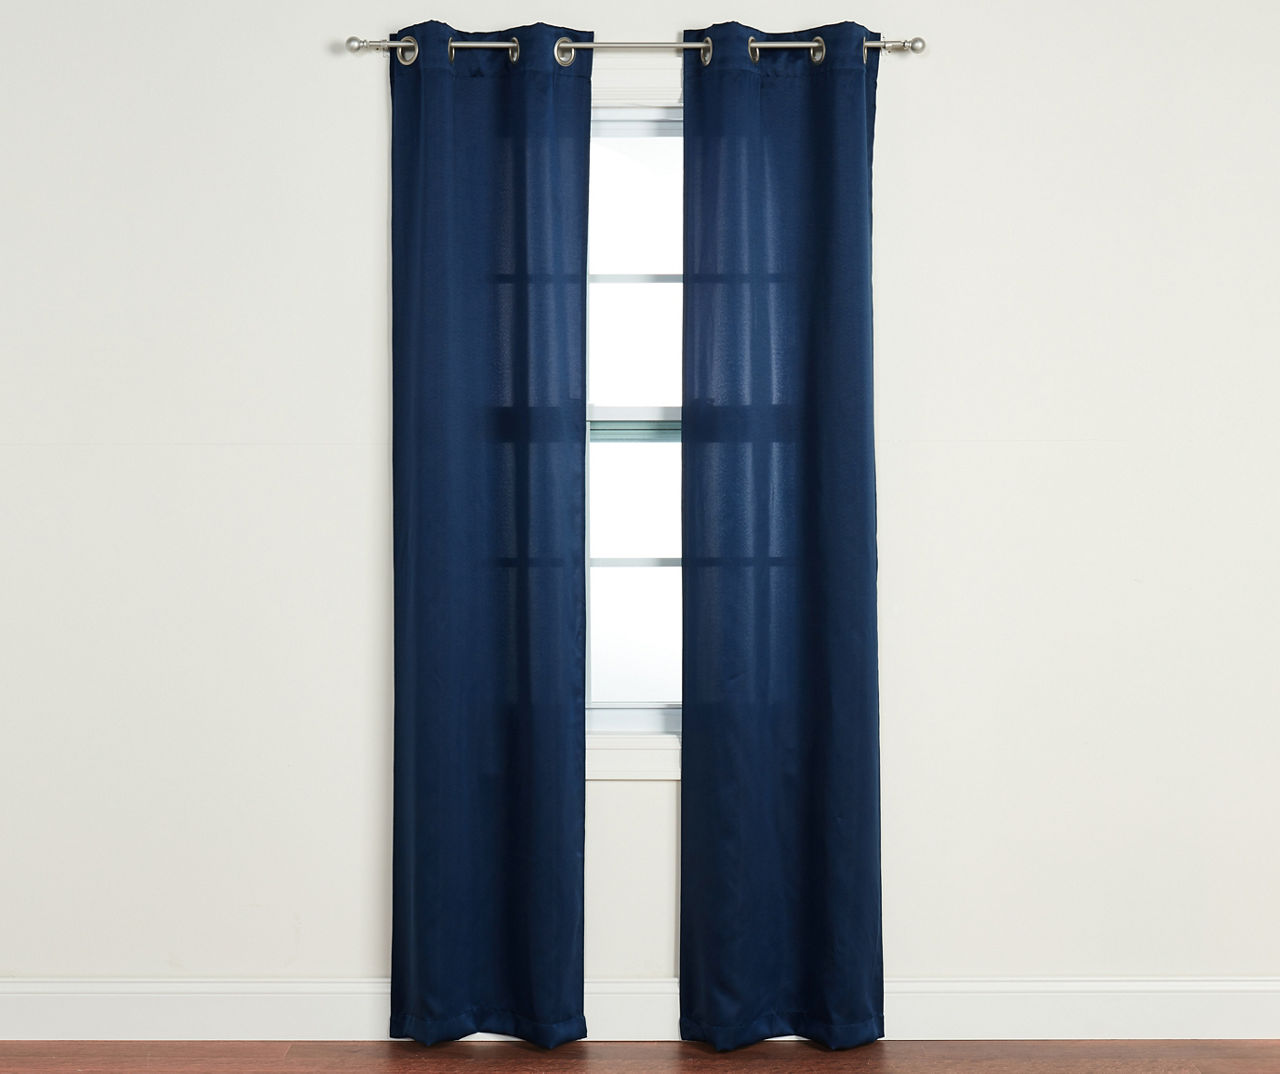 4-Piece Putnam Navy Room-Darkening Curtain Panels Set, (84")